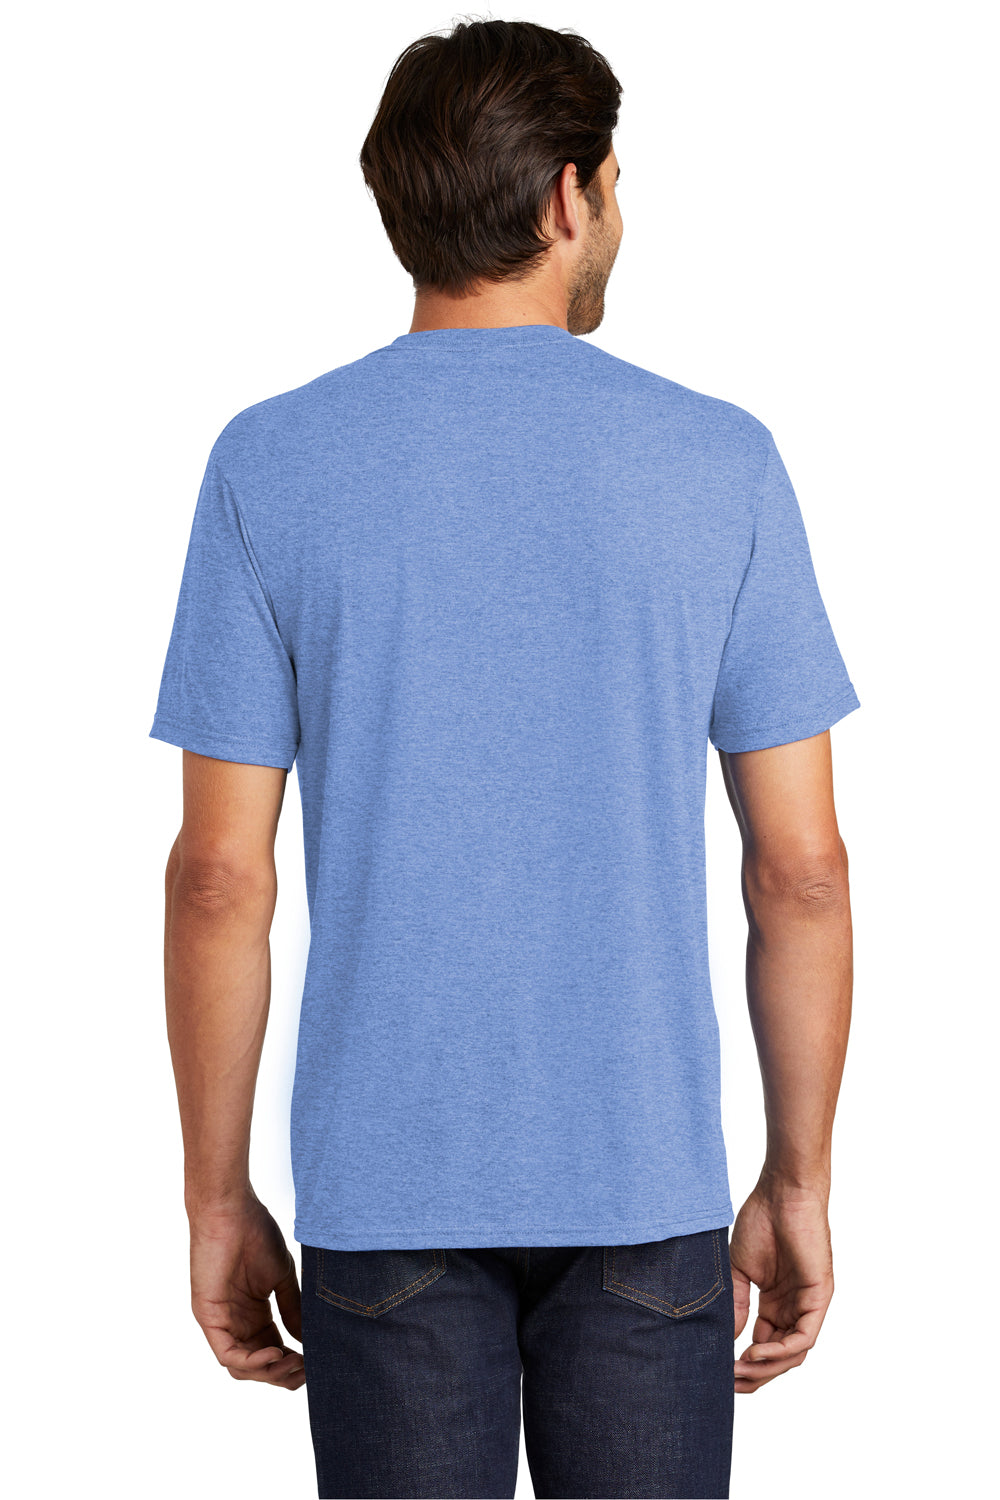 District DM130 Mens Perfect Tri Short Sleeve Crewneck T-Shirt Maritime Blue Frost Back